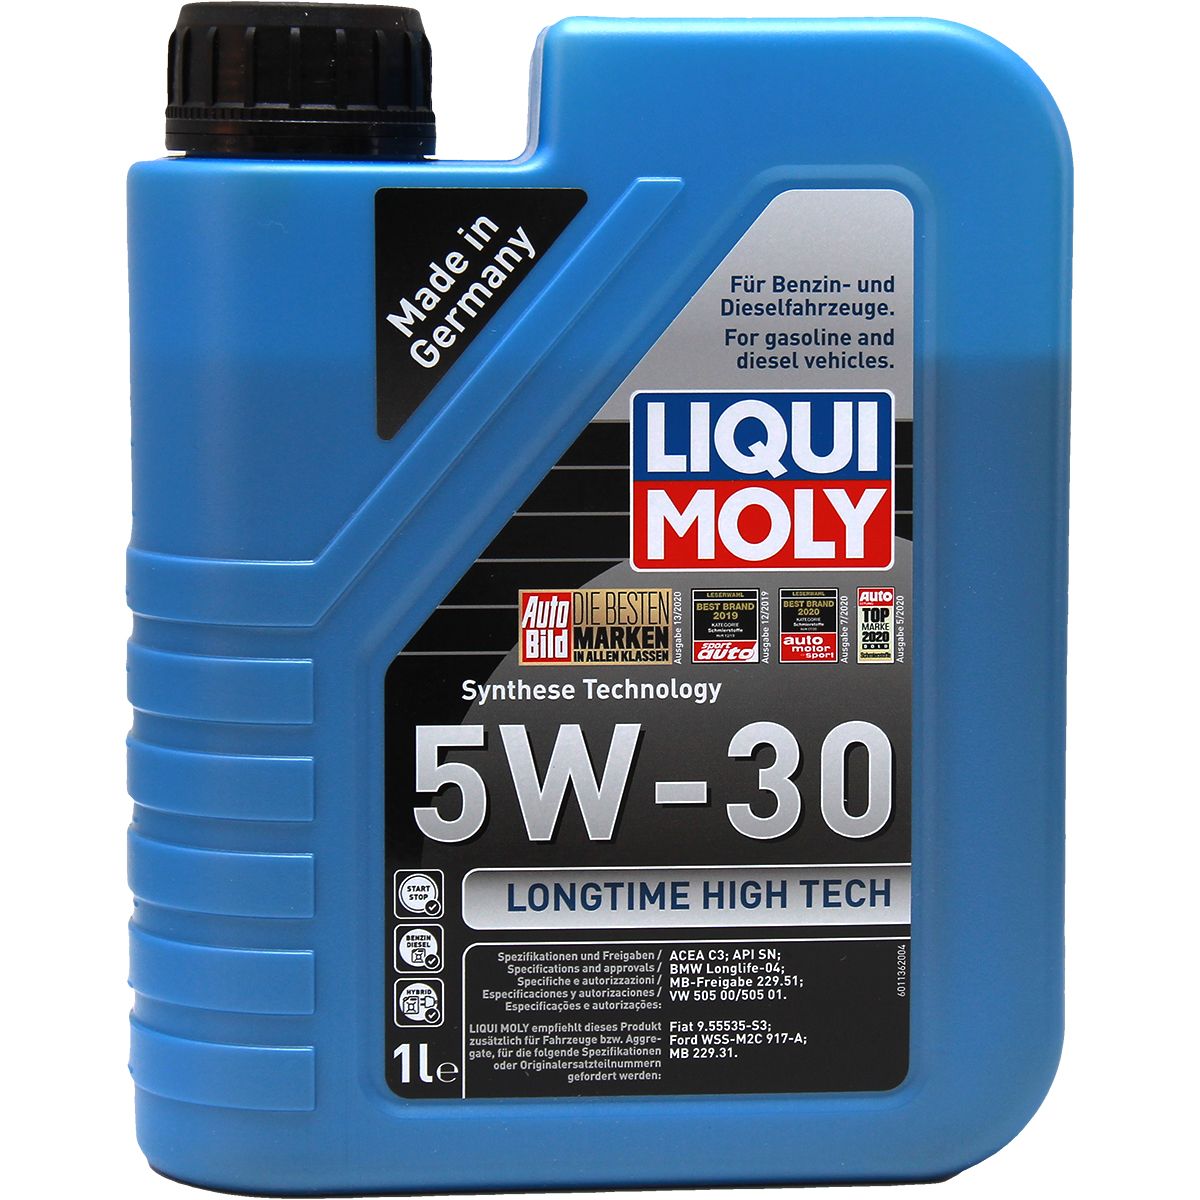 Liqui Moly Longtime High Tech 5W-30 1 Liter